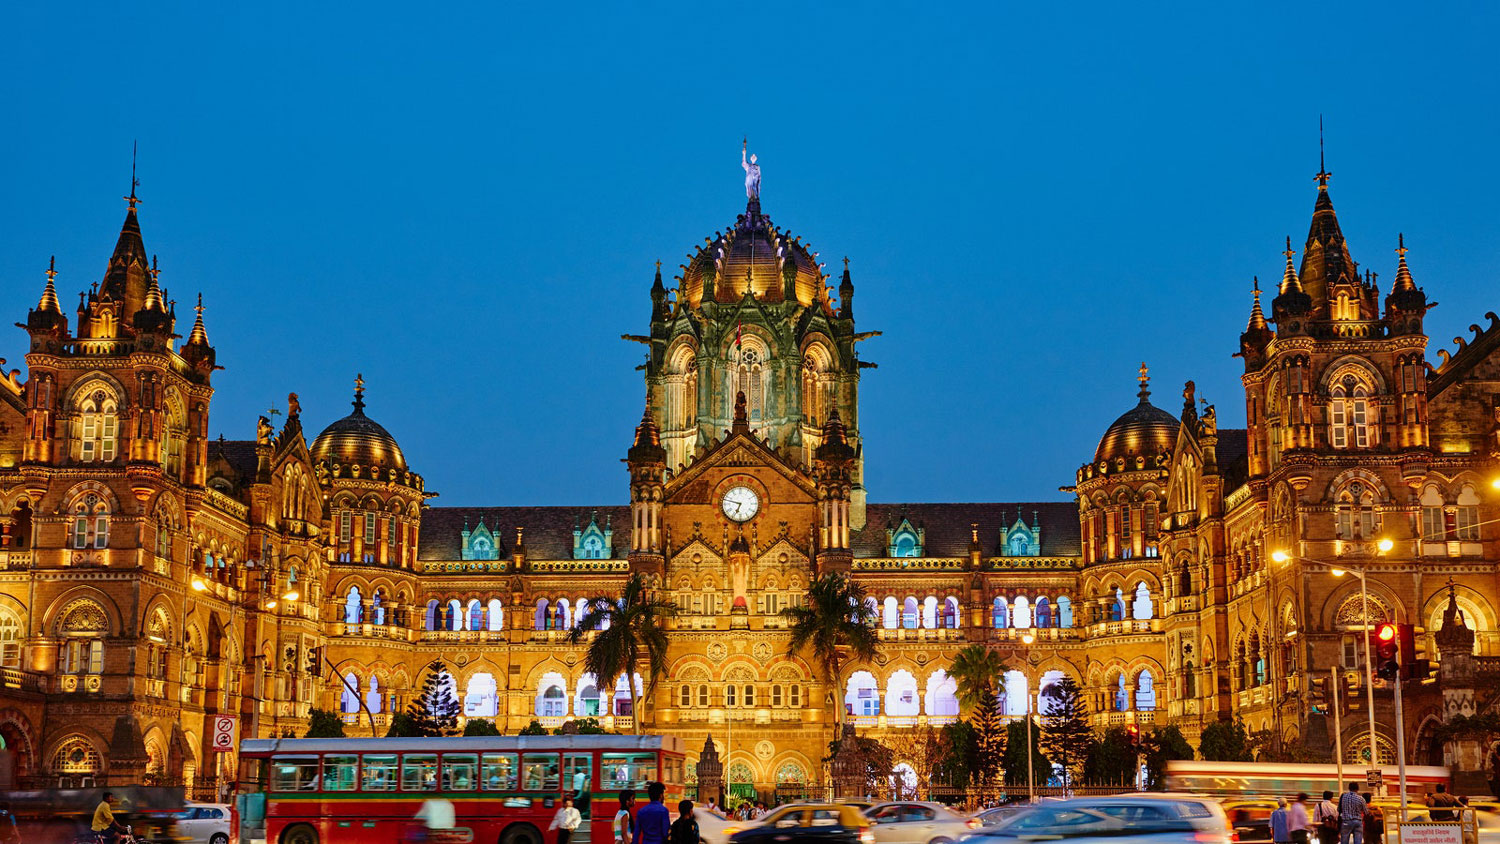 Chhatrapati-Shivaji Terminus - Mumbai, India<br />
